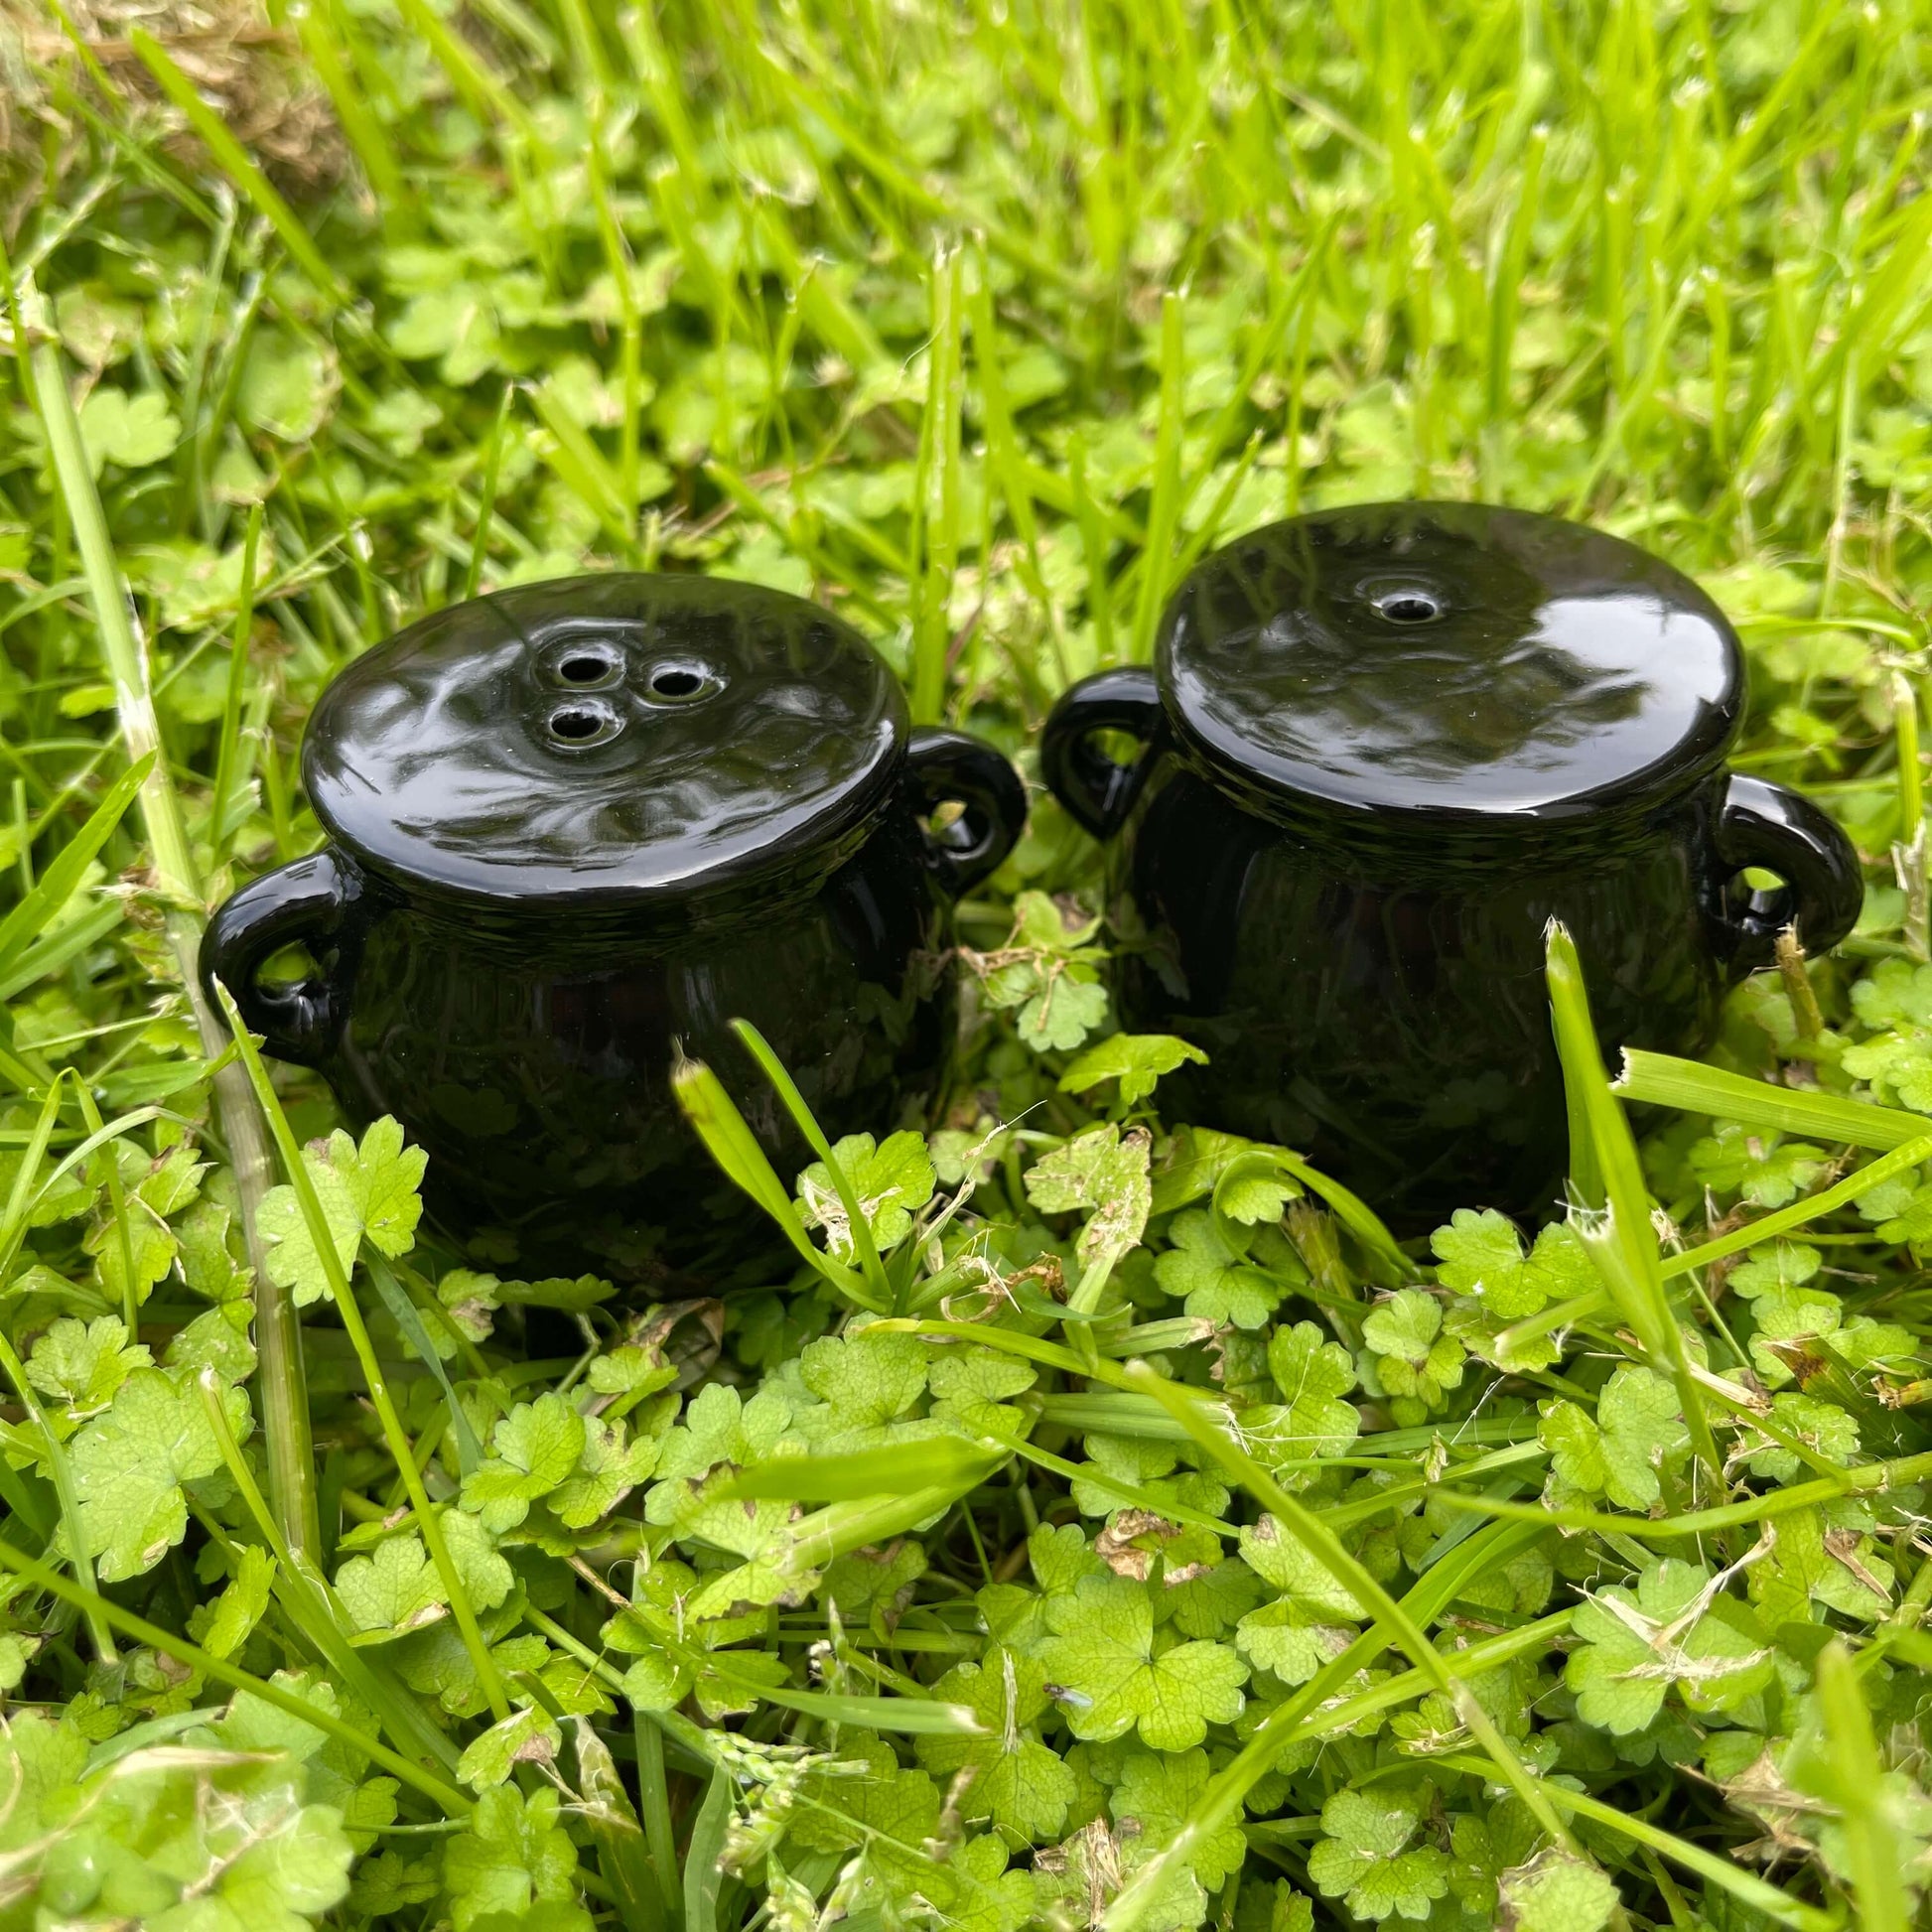 Black ceramic cauldron shaped salt and pepper shaker set.